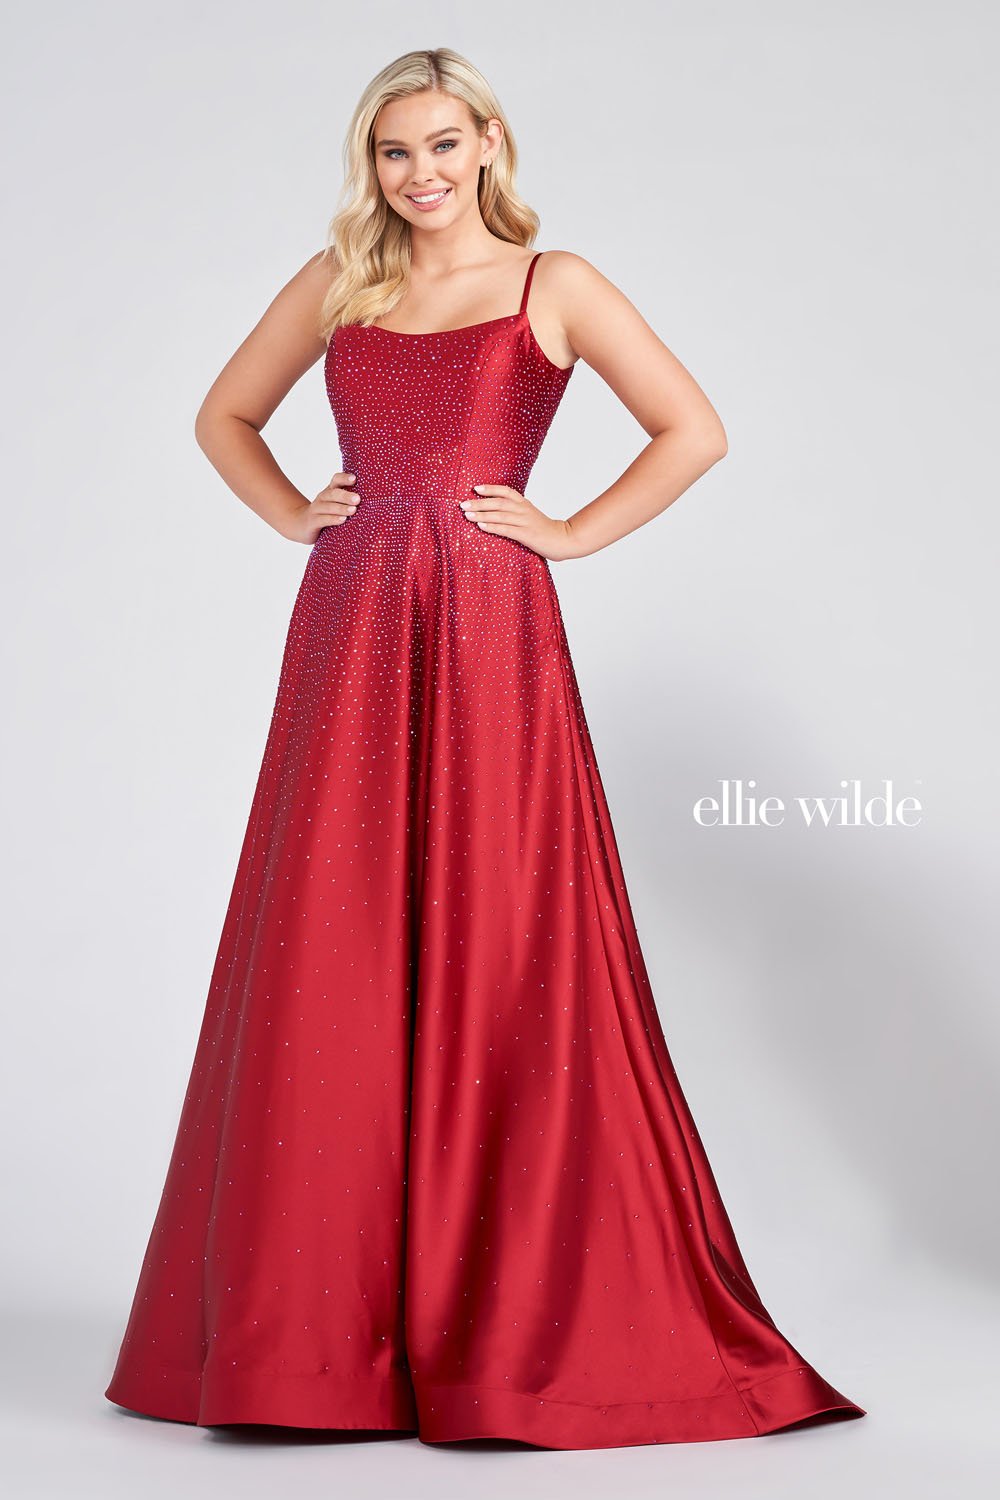 Ellie Wilde Ruby EW122119 Prom Dress Image.  Ruby formal dress.